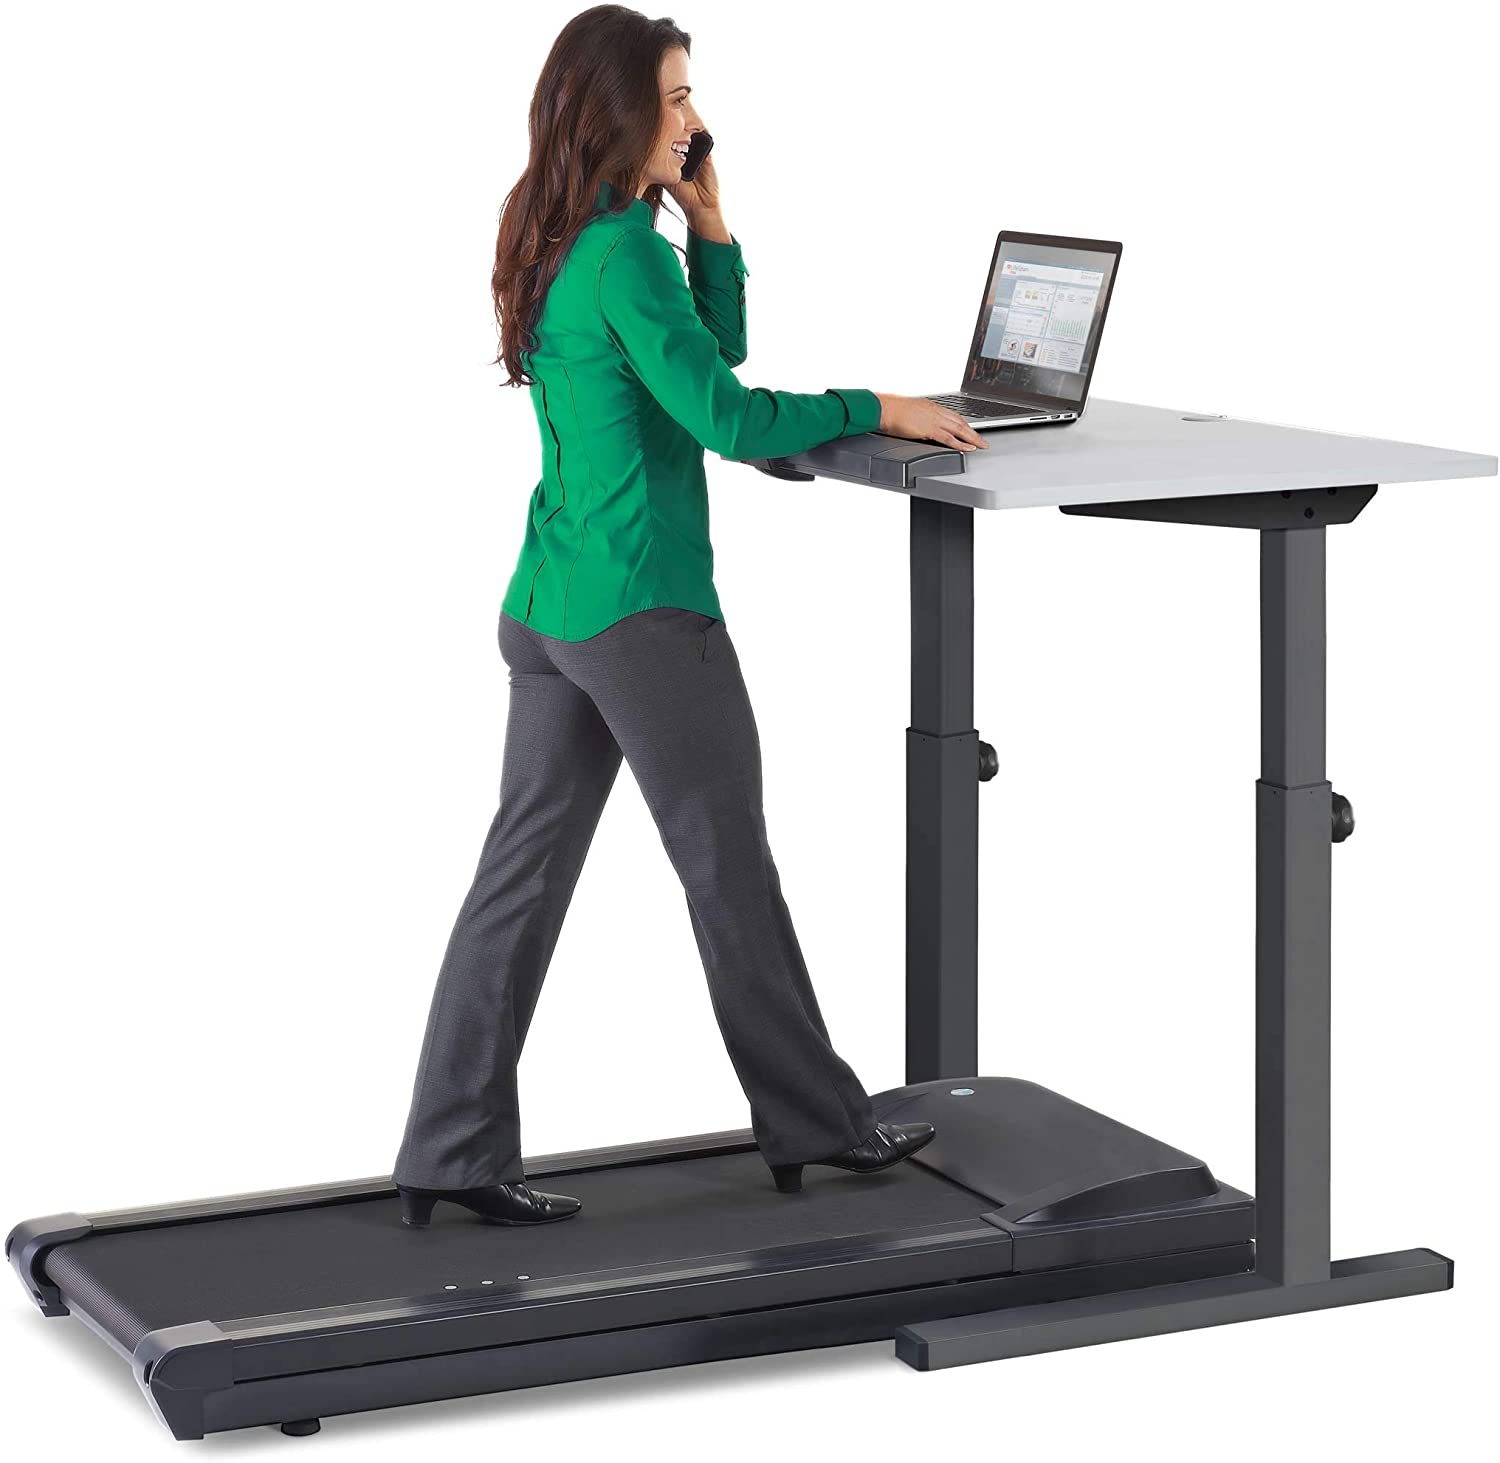 LifeSpan Exercise Ergonomic Standing Desk